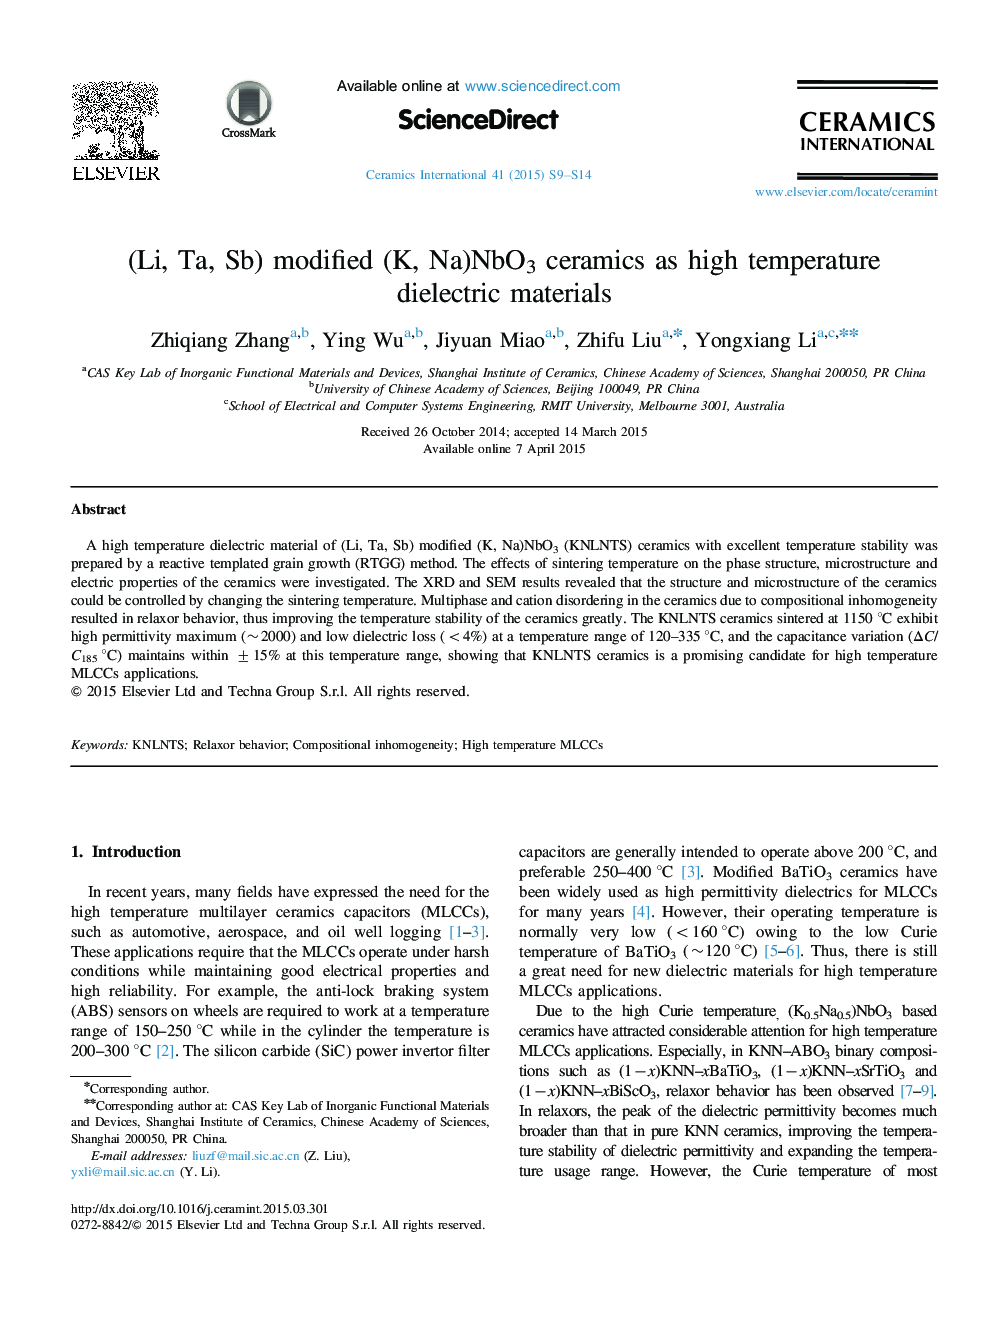 (Li, Ta, Sb) modified (K, Na)NbO3 ceramics as high temperature dielectric materials